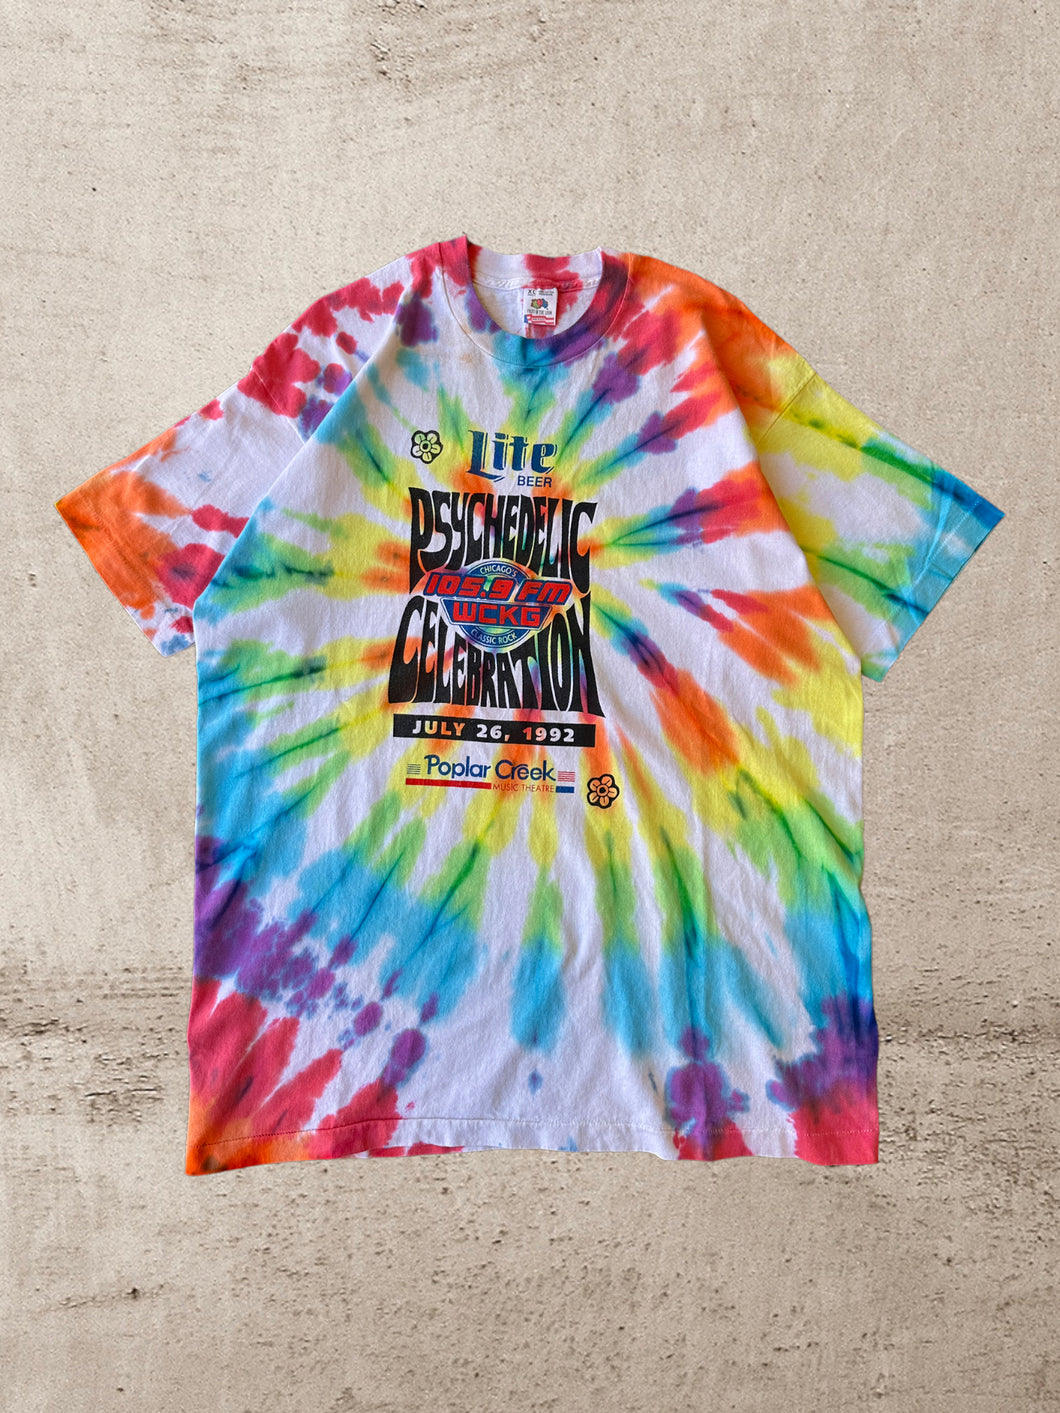 1992 Psychedelic Celebration Miller Light T-Shirt - XL